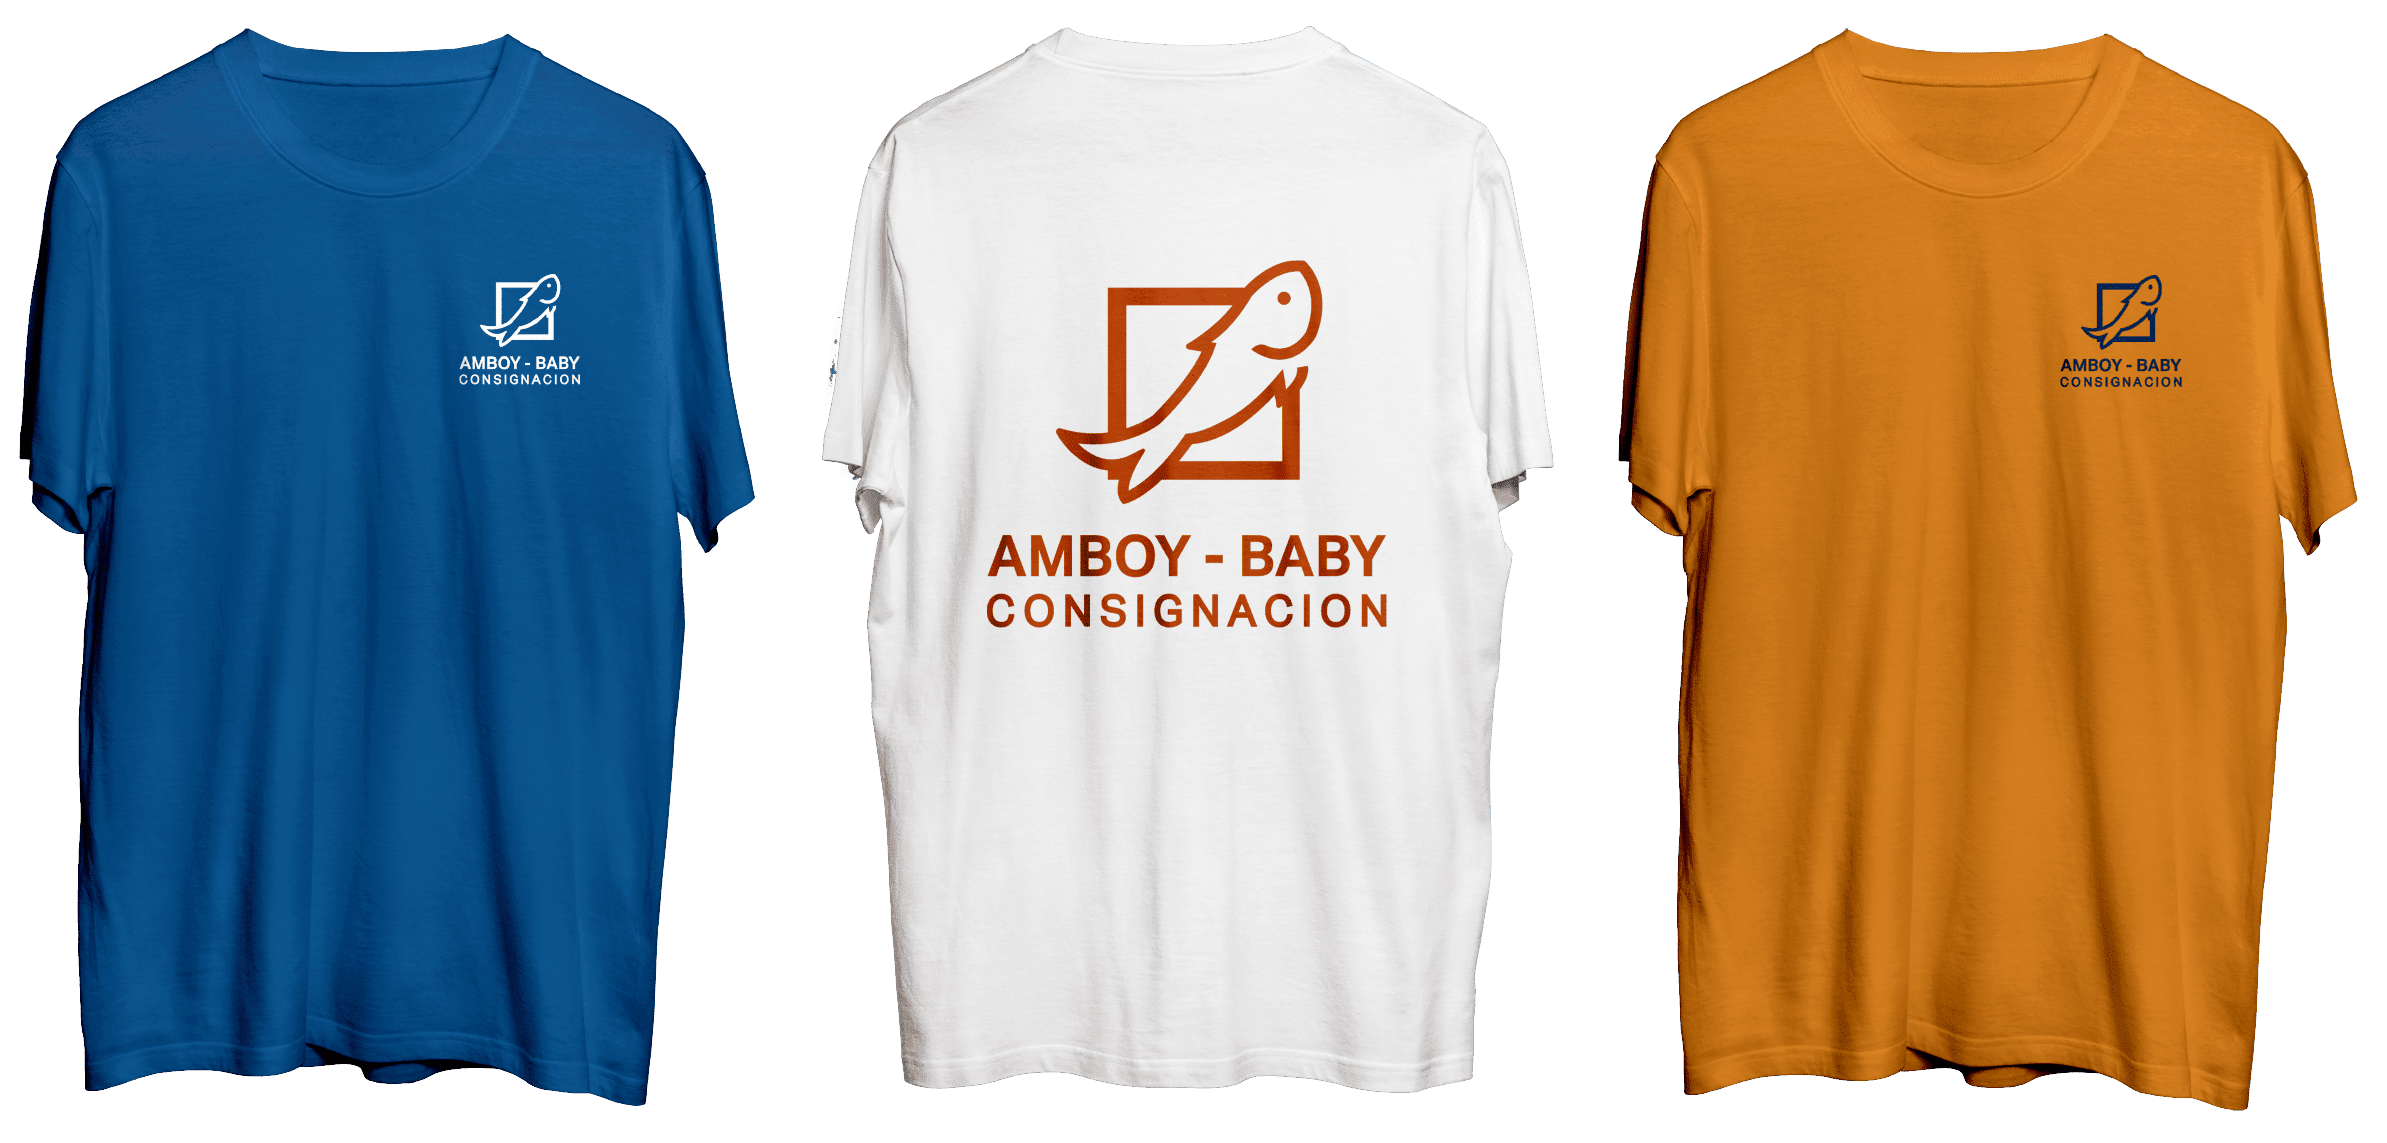 Amboy-Baby Consignacion Shirts